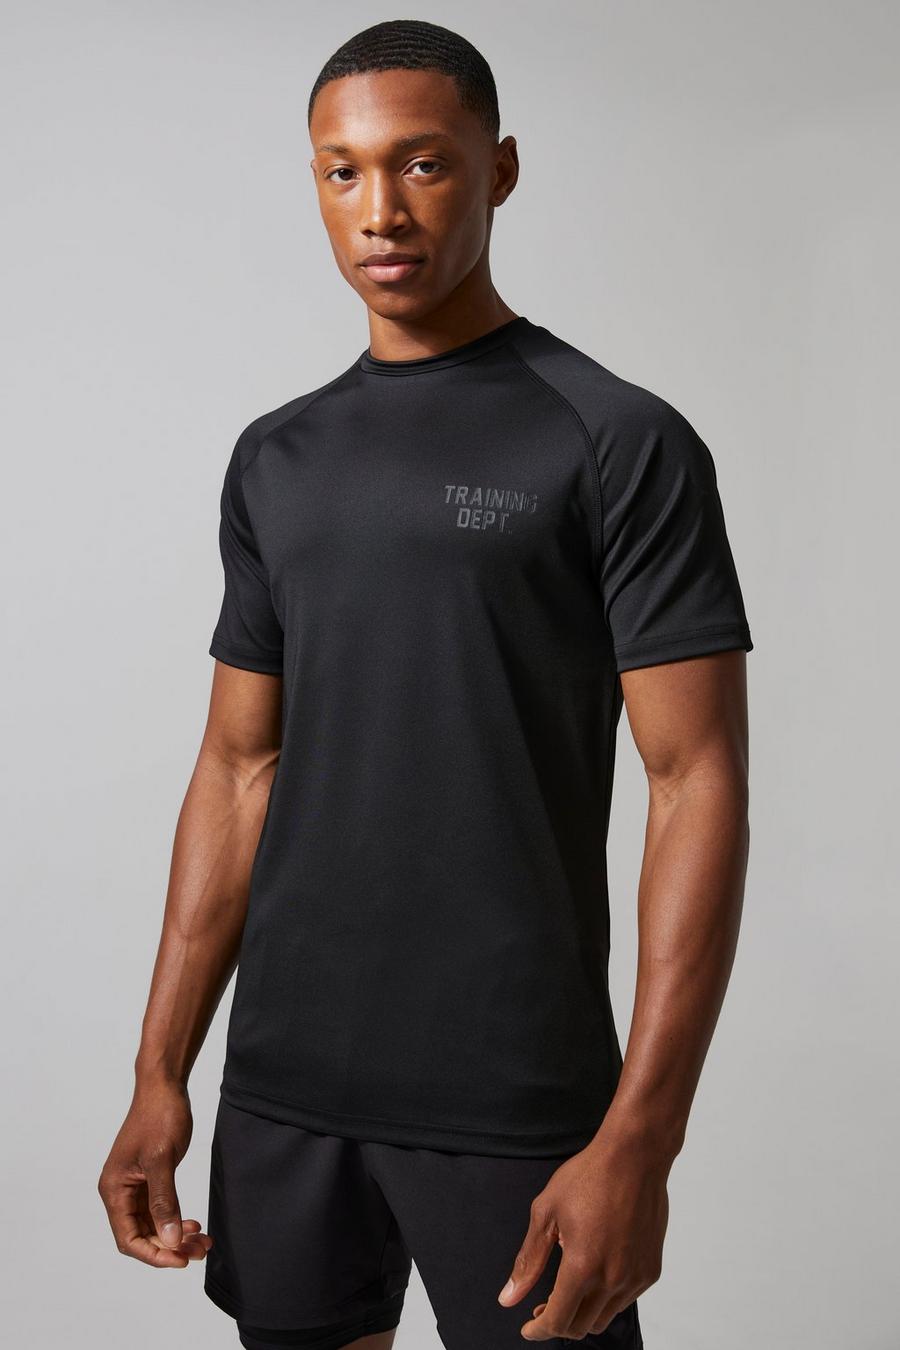 Camiseta MAN Active Training Dept ajustada al músculo, Black image number 1